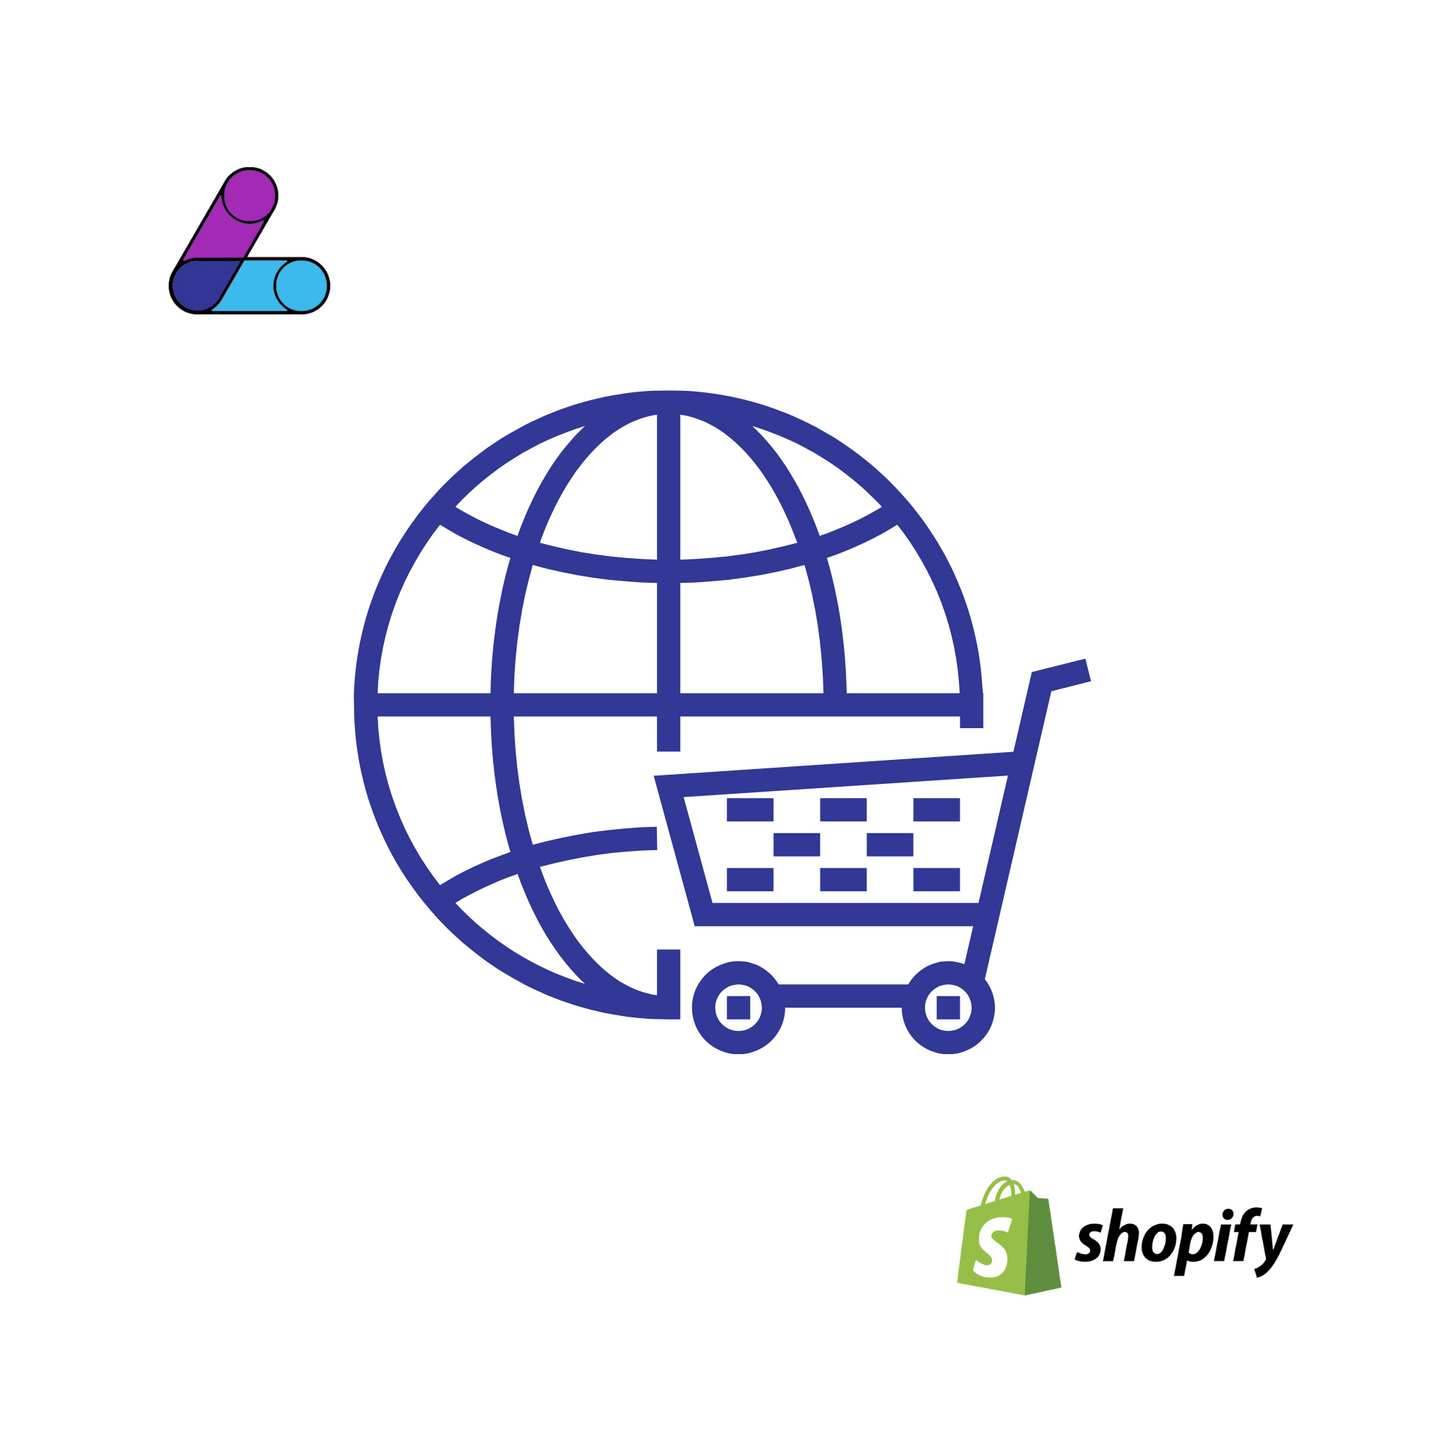 Shopify Digitalization